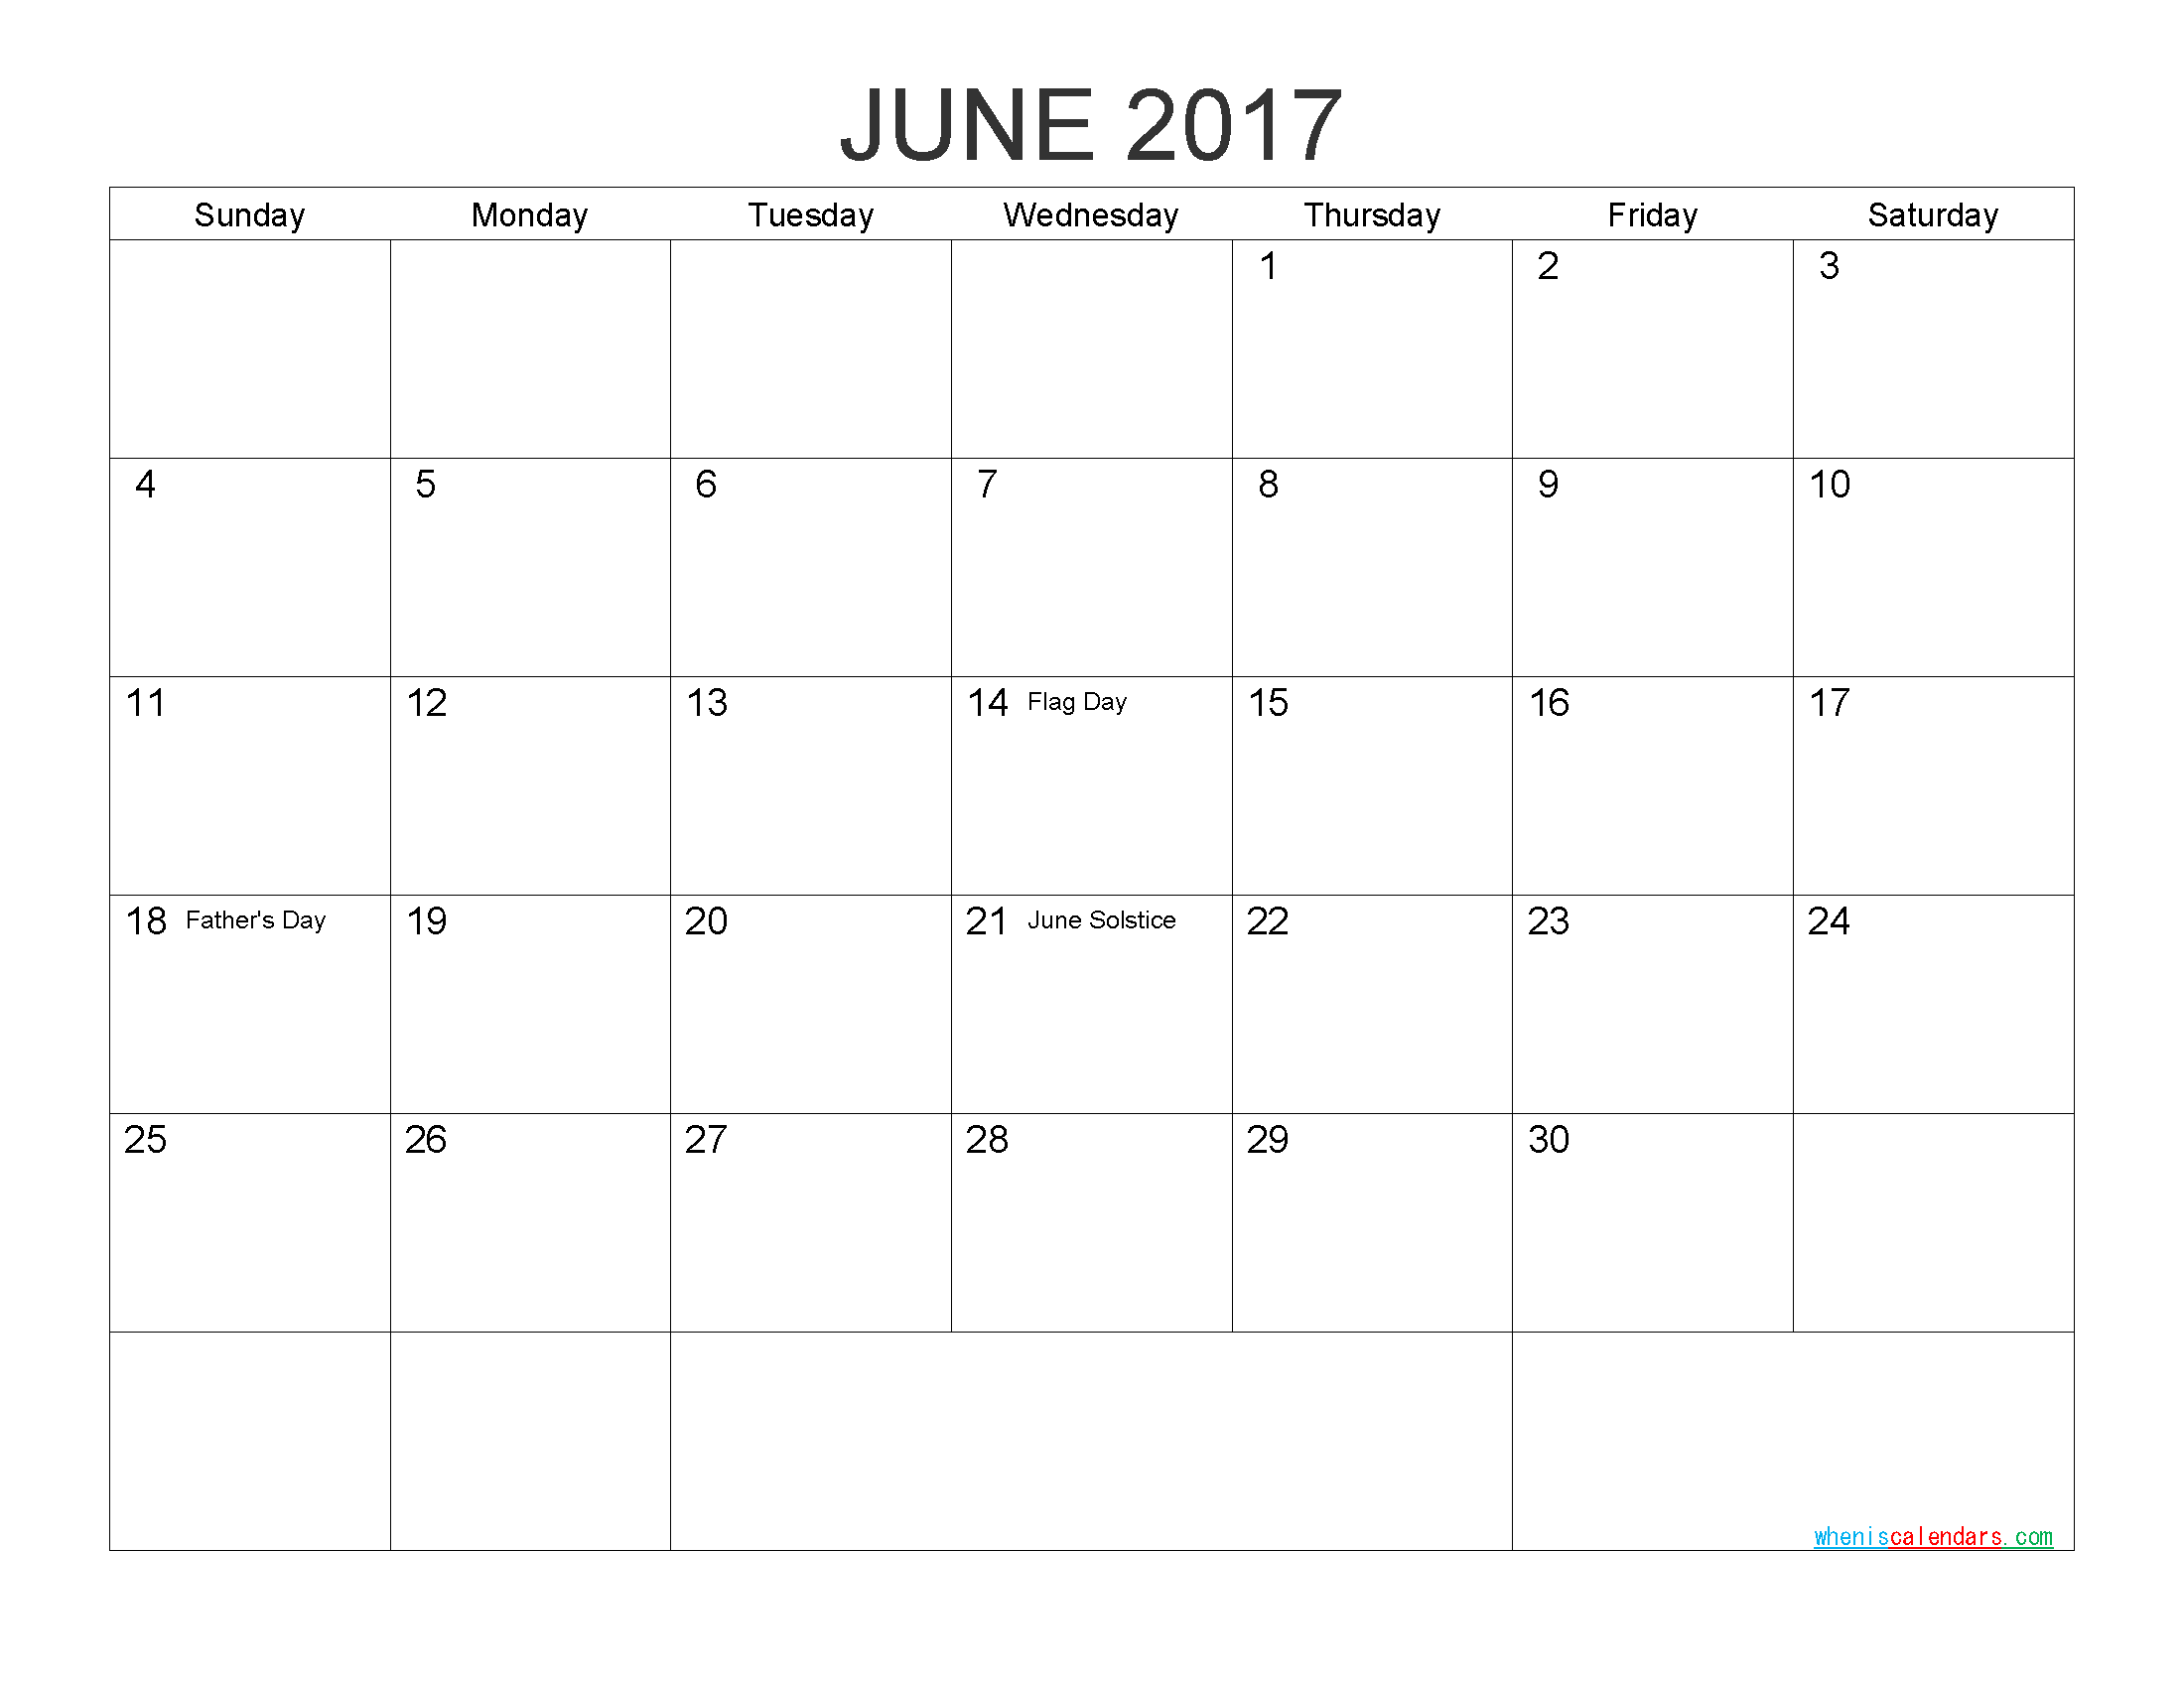 june-2017-calendar-printable-with-holidays-whatisthedatetoday-com